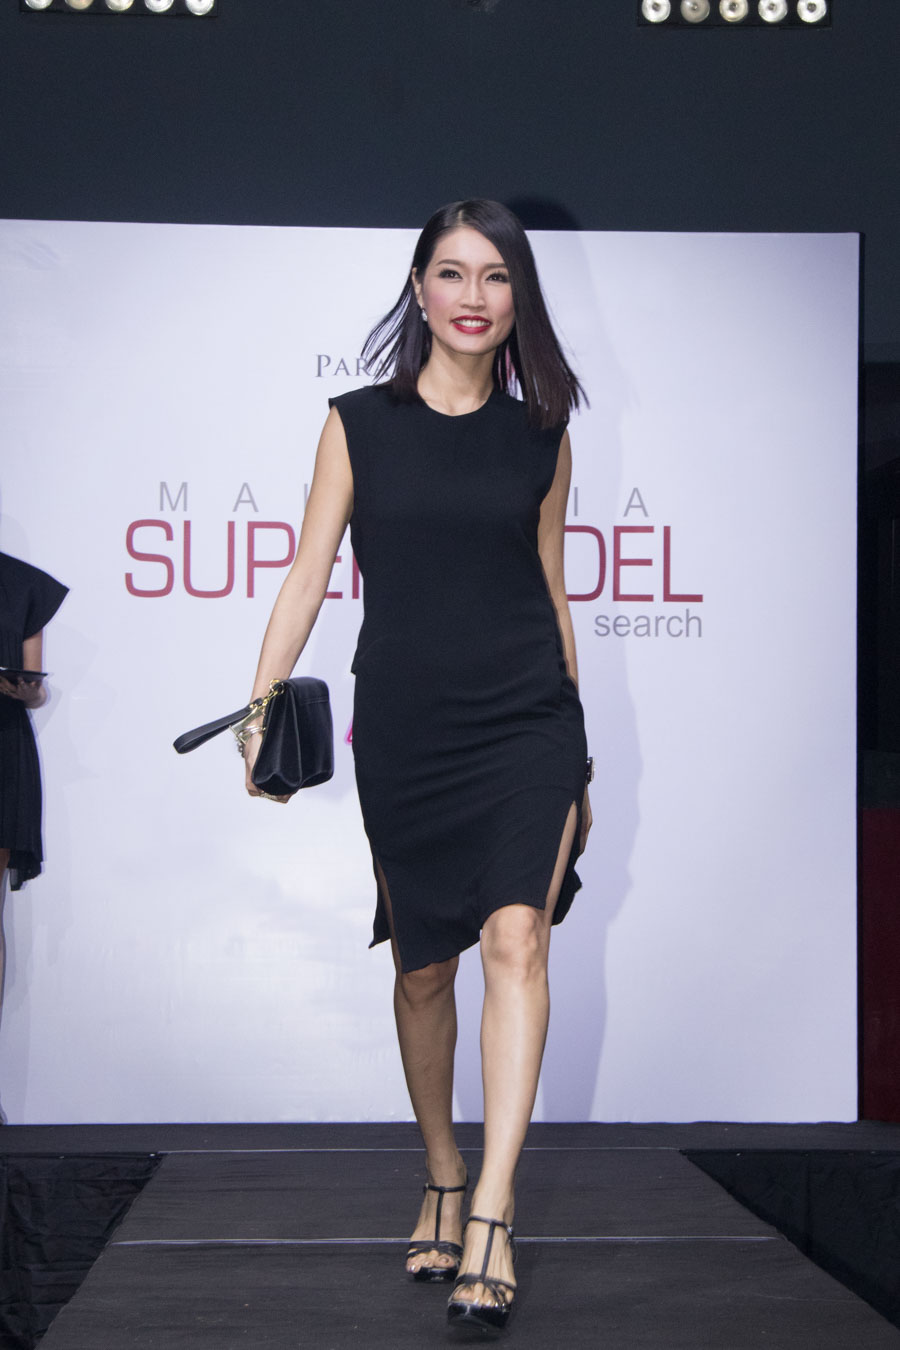 Amber Chia, Malaysia's Supermodel and the principal of Amber Chia Academy